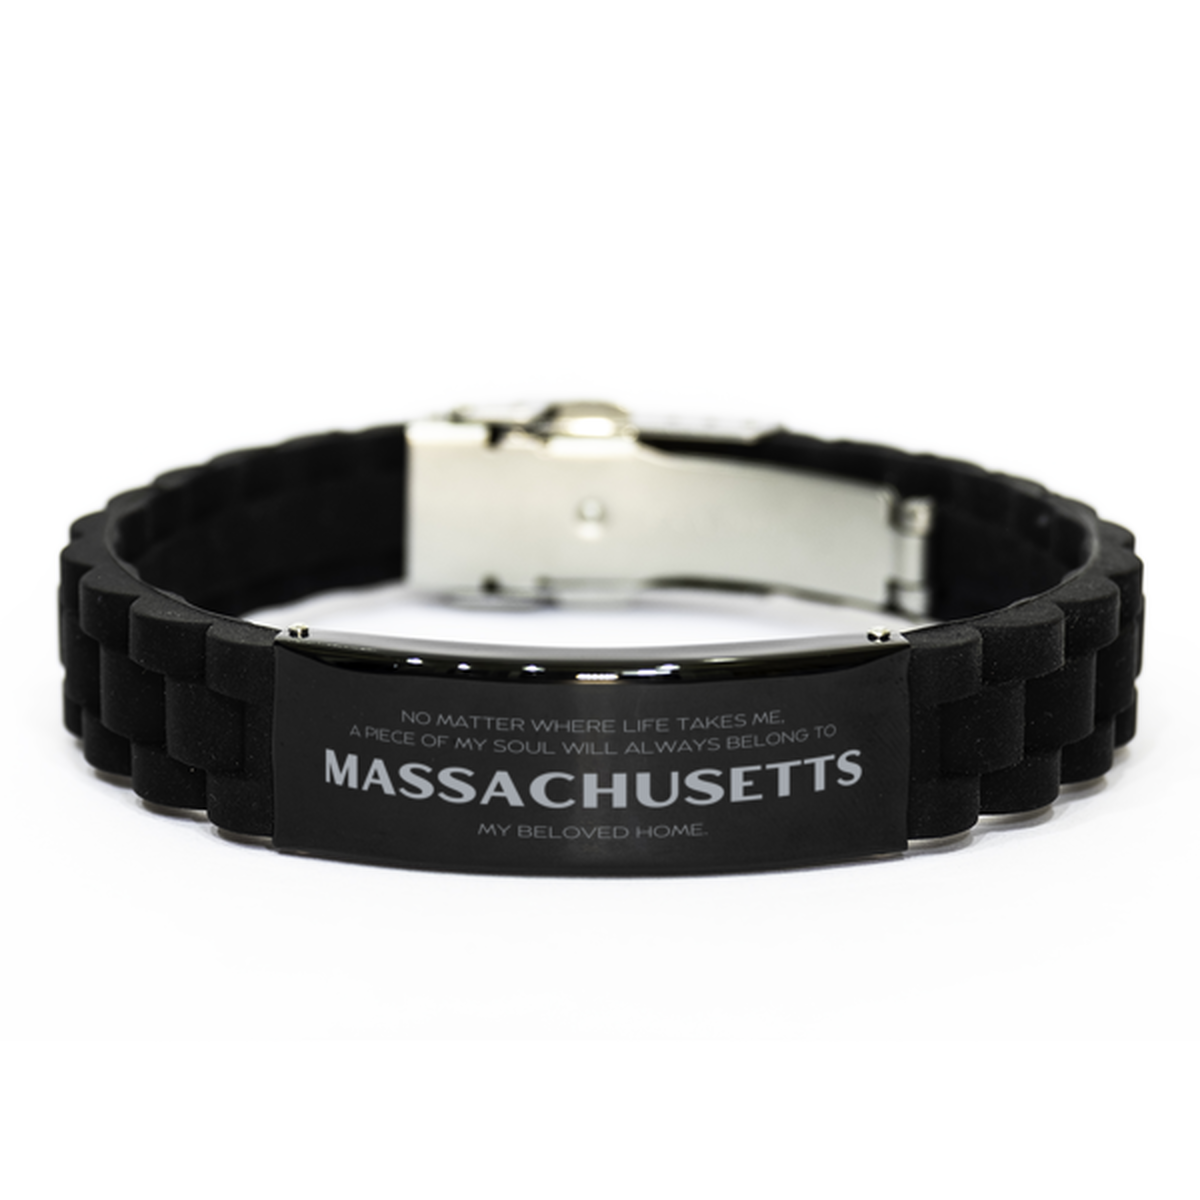 Love Massachusetts State Gifts, My soul will always belong to Massachusetts, Proud Black Glidelock Clasp Bracelet, Birthday Unique Gifts For Massachusetts Men, Women, Friends